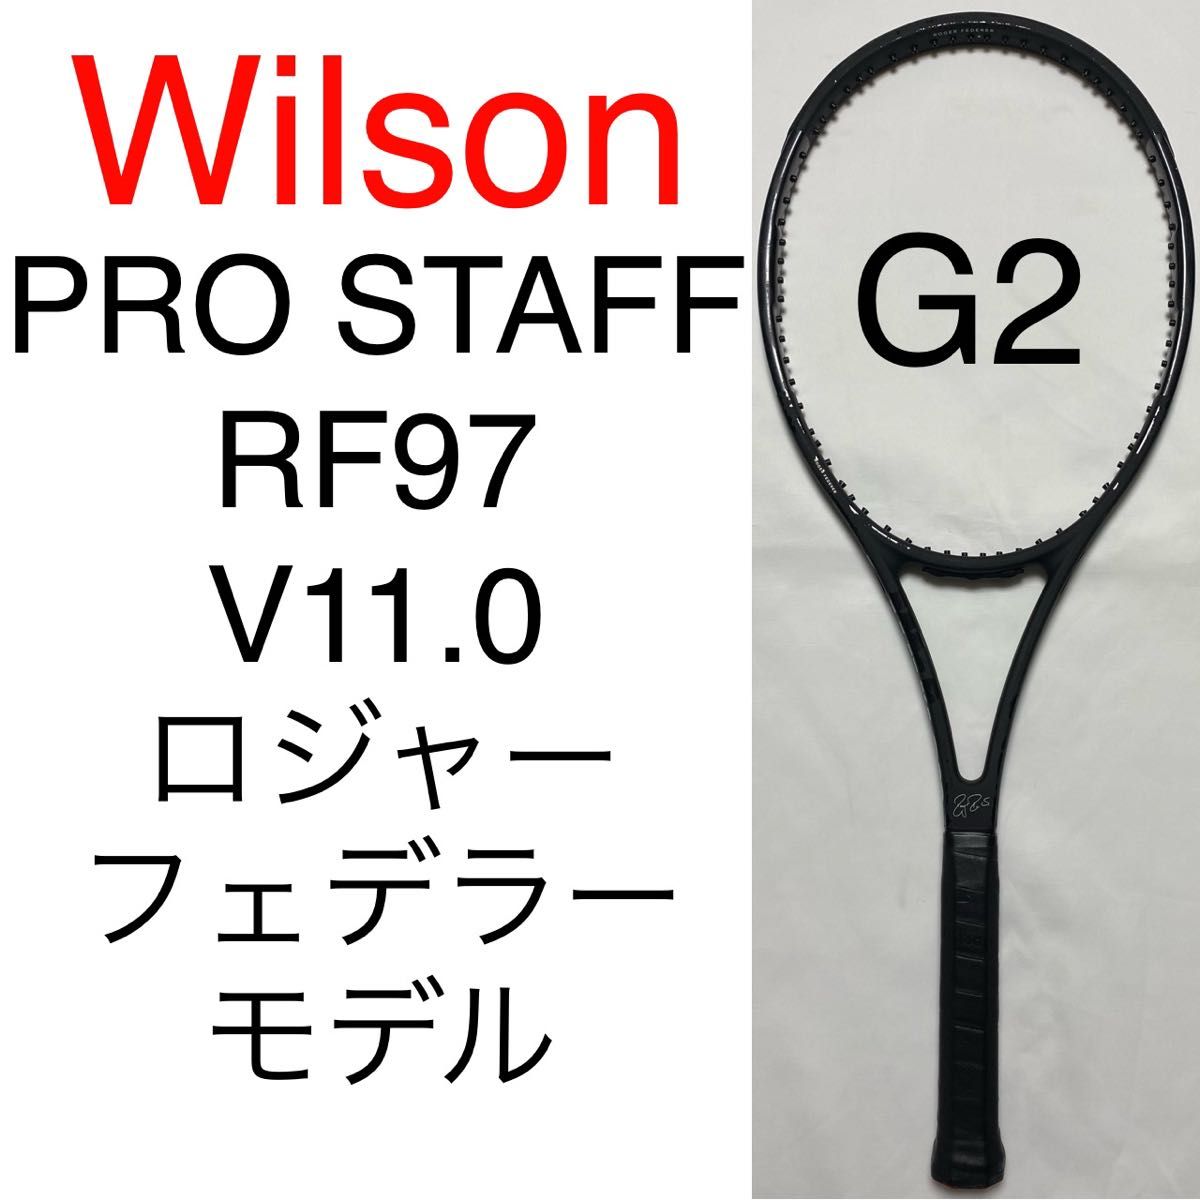 Wilson PRO STAFF RF97 V11.0 スイス国旗有り G2 ウィルソン プロスタッフ 硬式テニスラケット